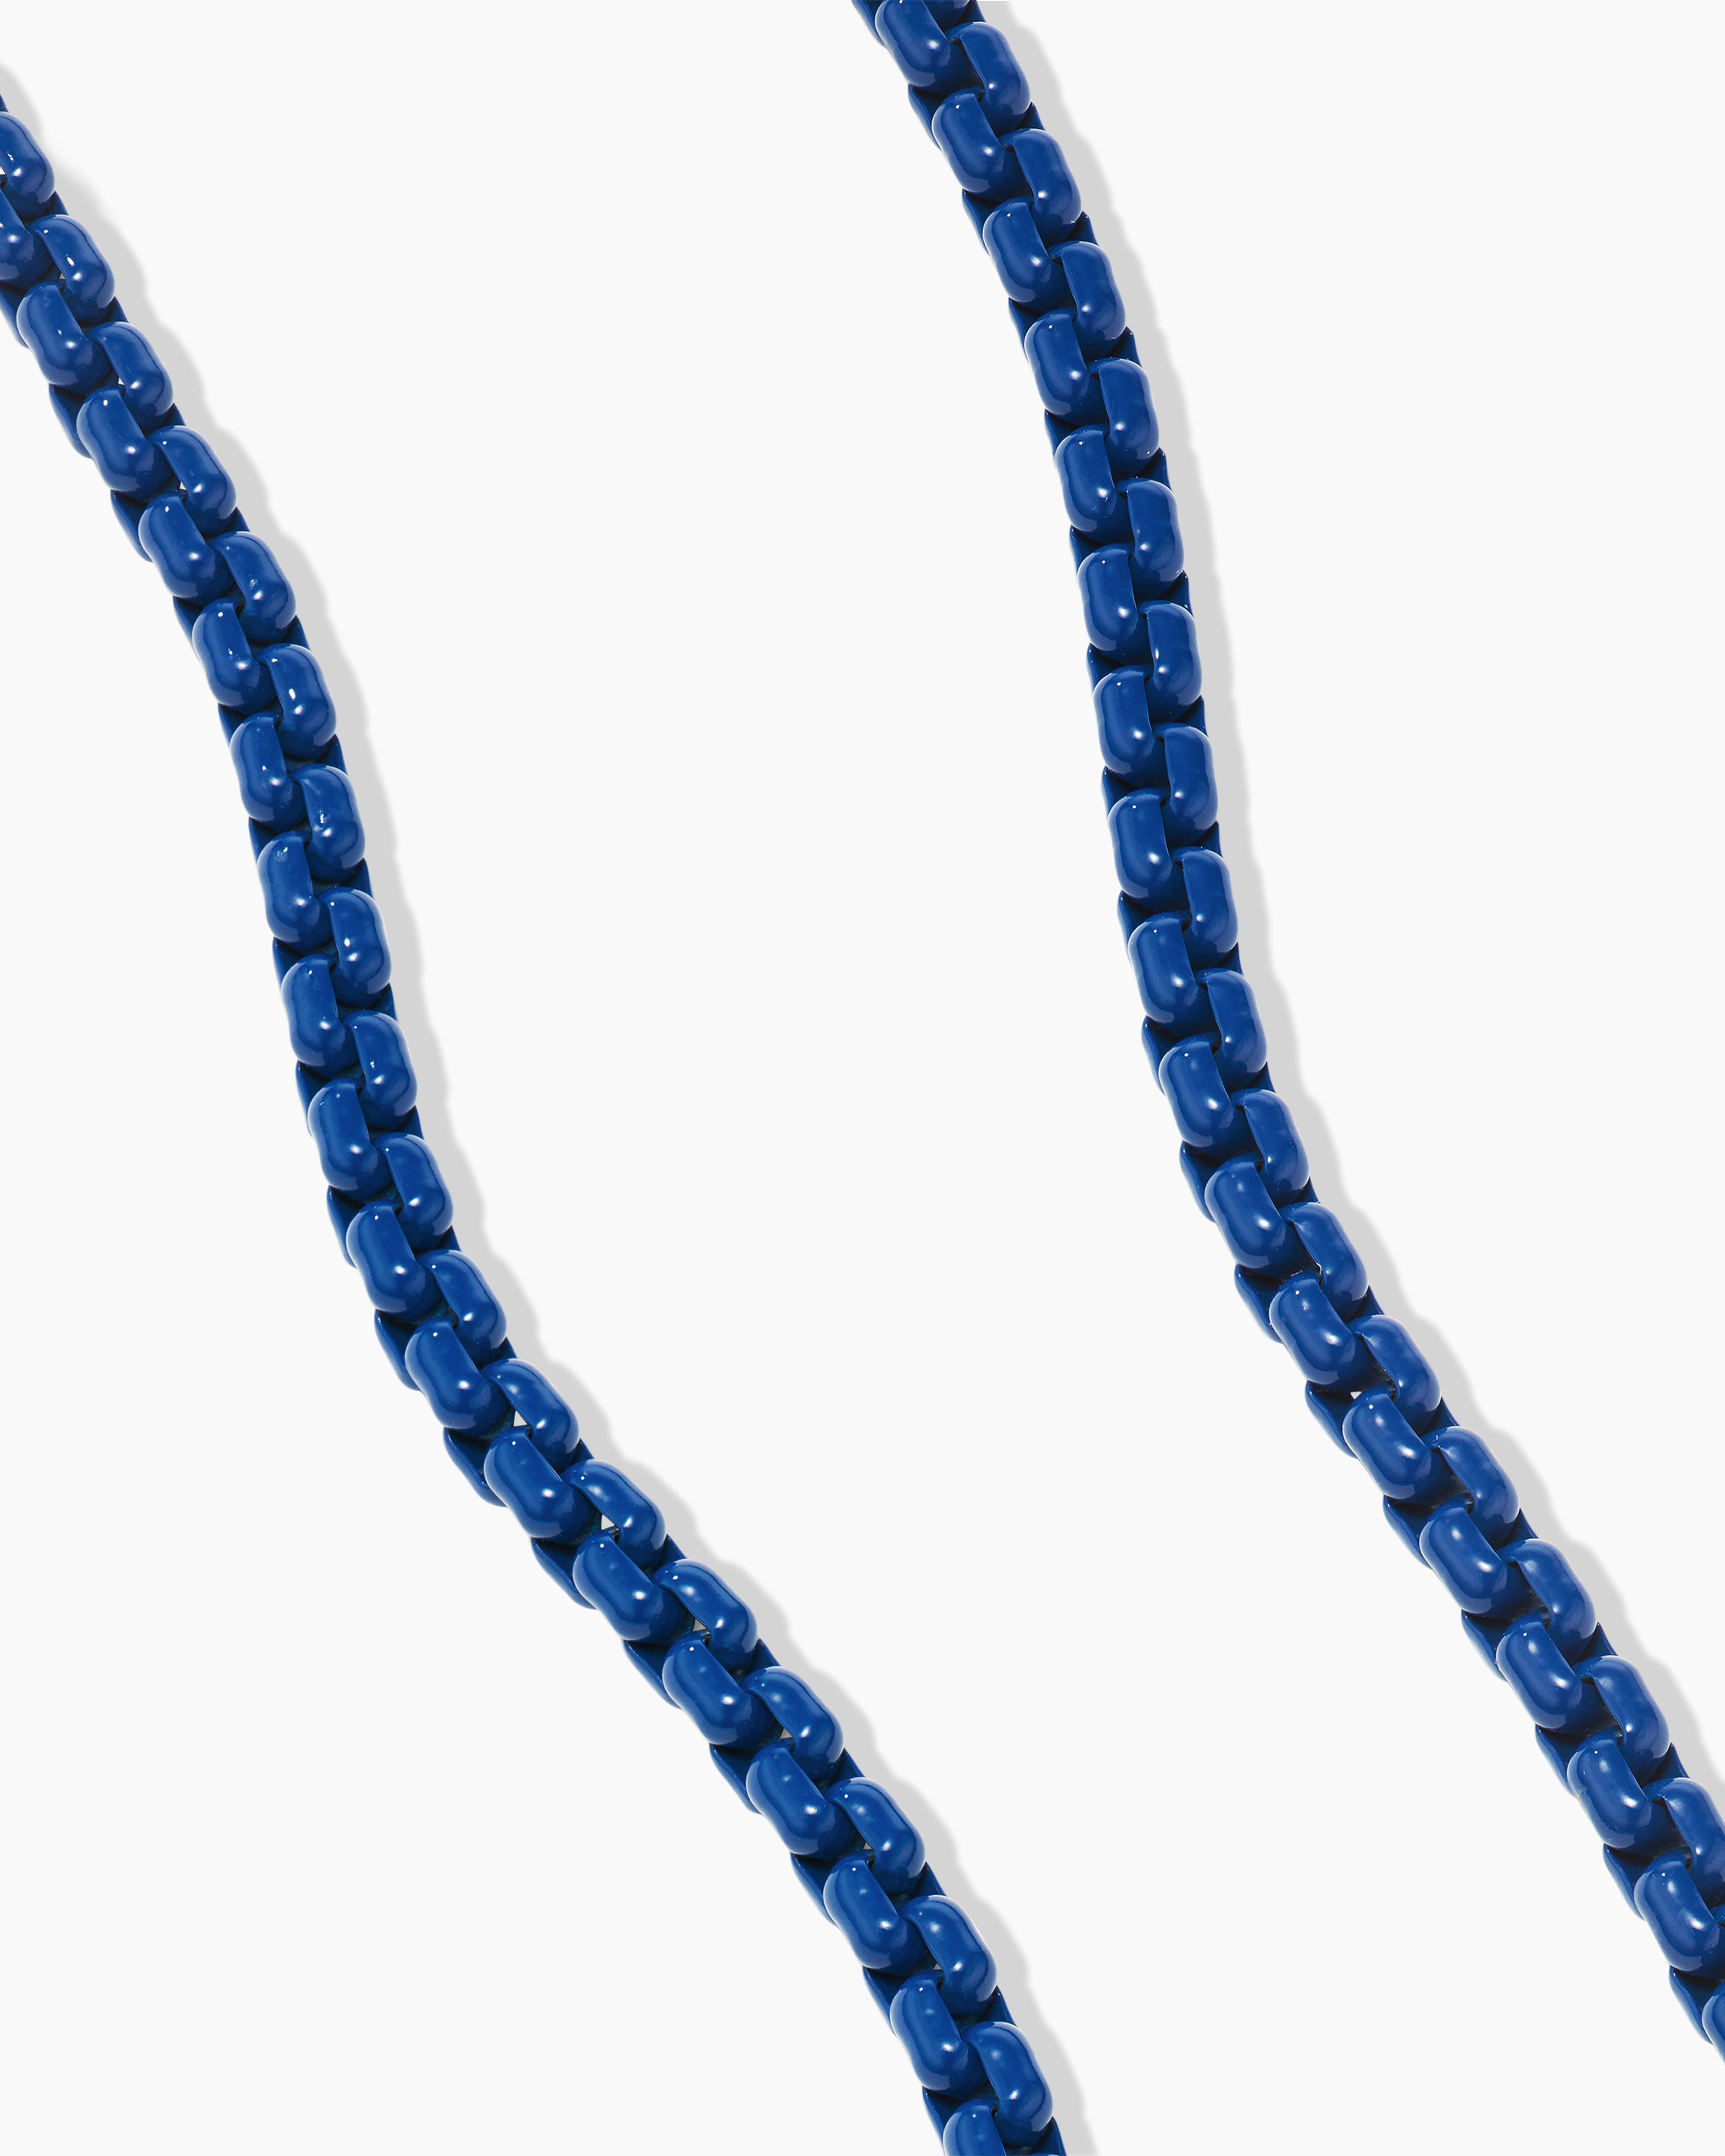 Men Colorful Chain Necklace